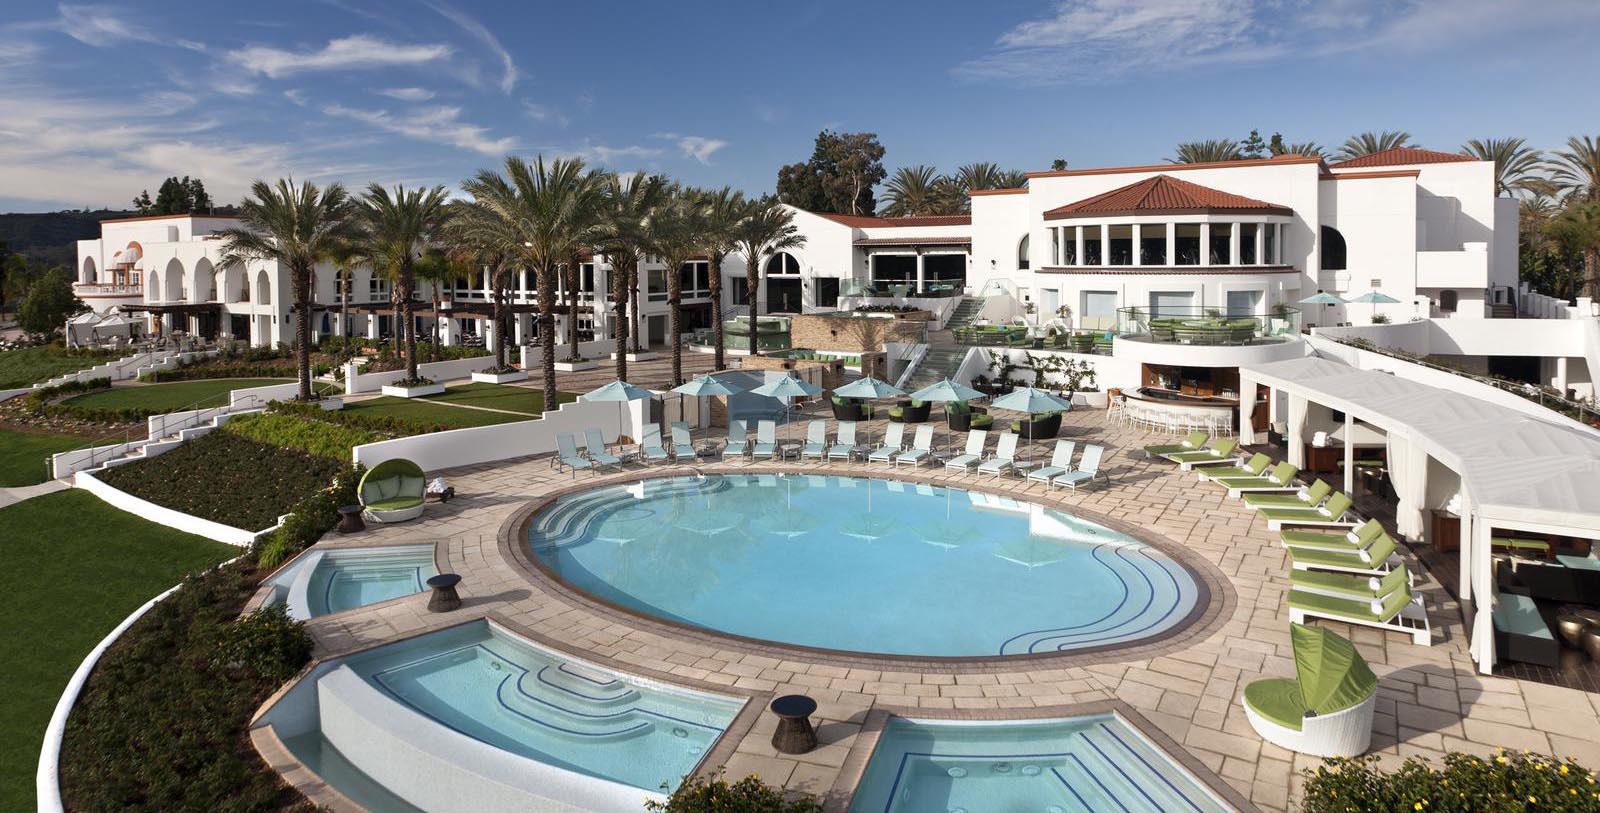 Image of Hotel Exterior & Outdoor Pool, Omni La Costa Resort & Spa, Carlsbad, California, 1965, Member of Historic Hotels of America, Overview